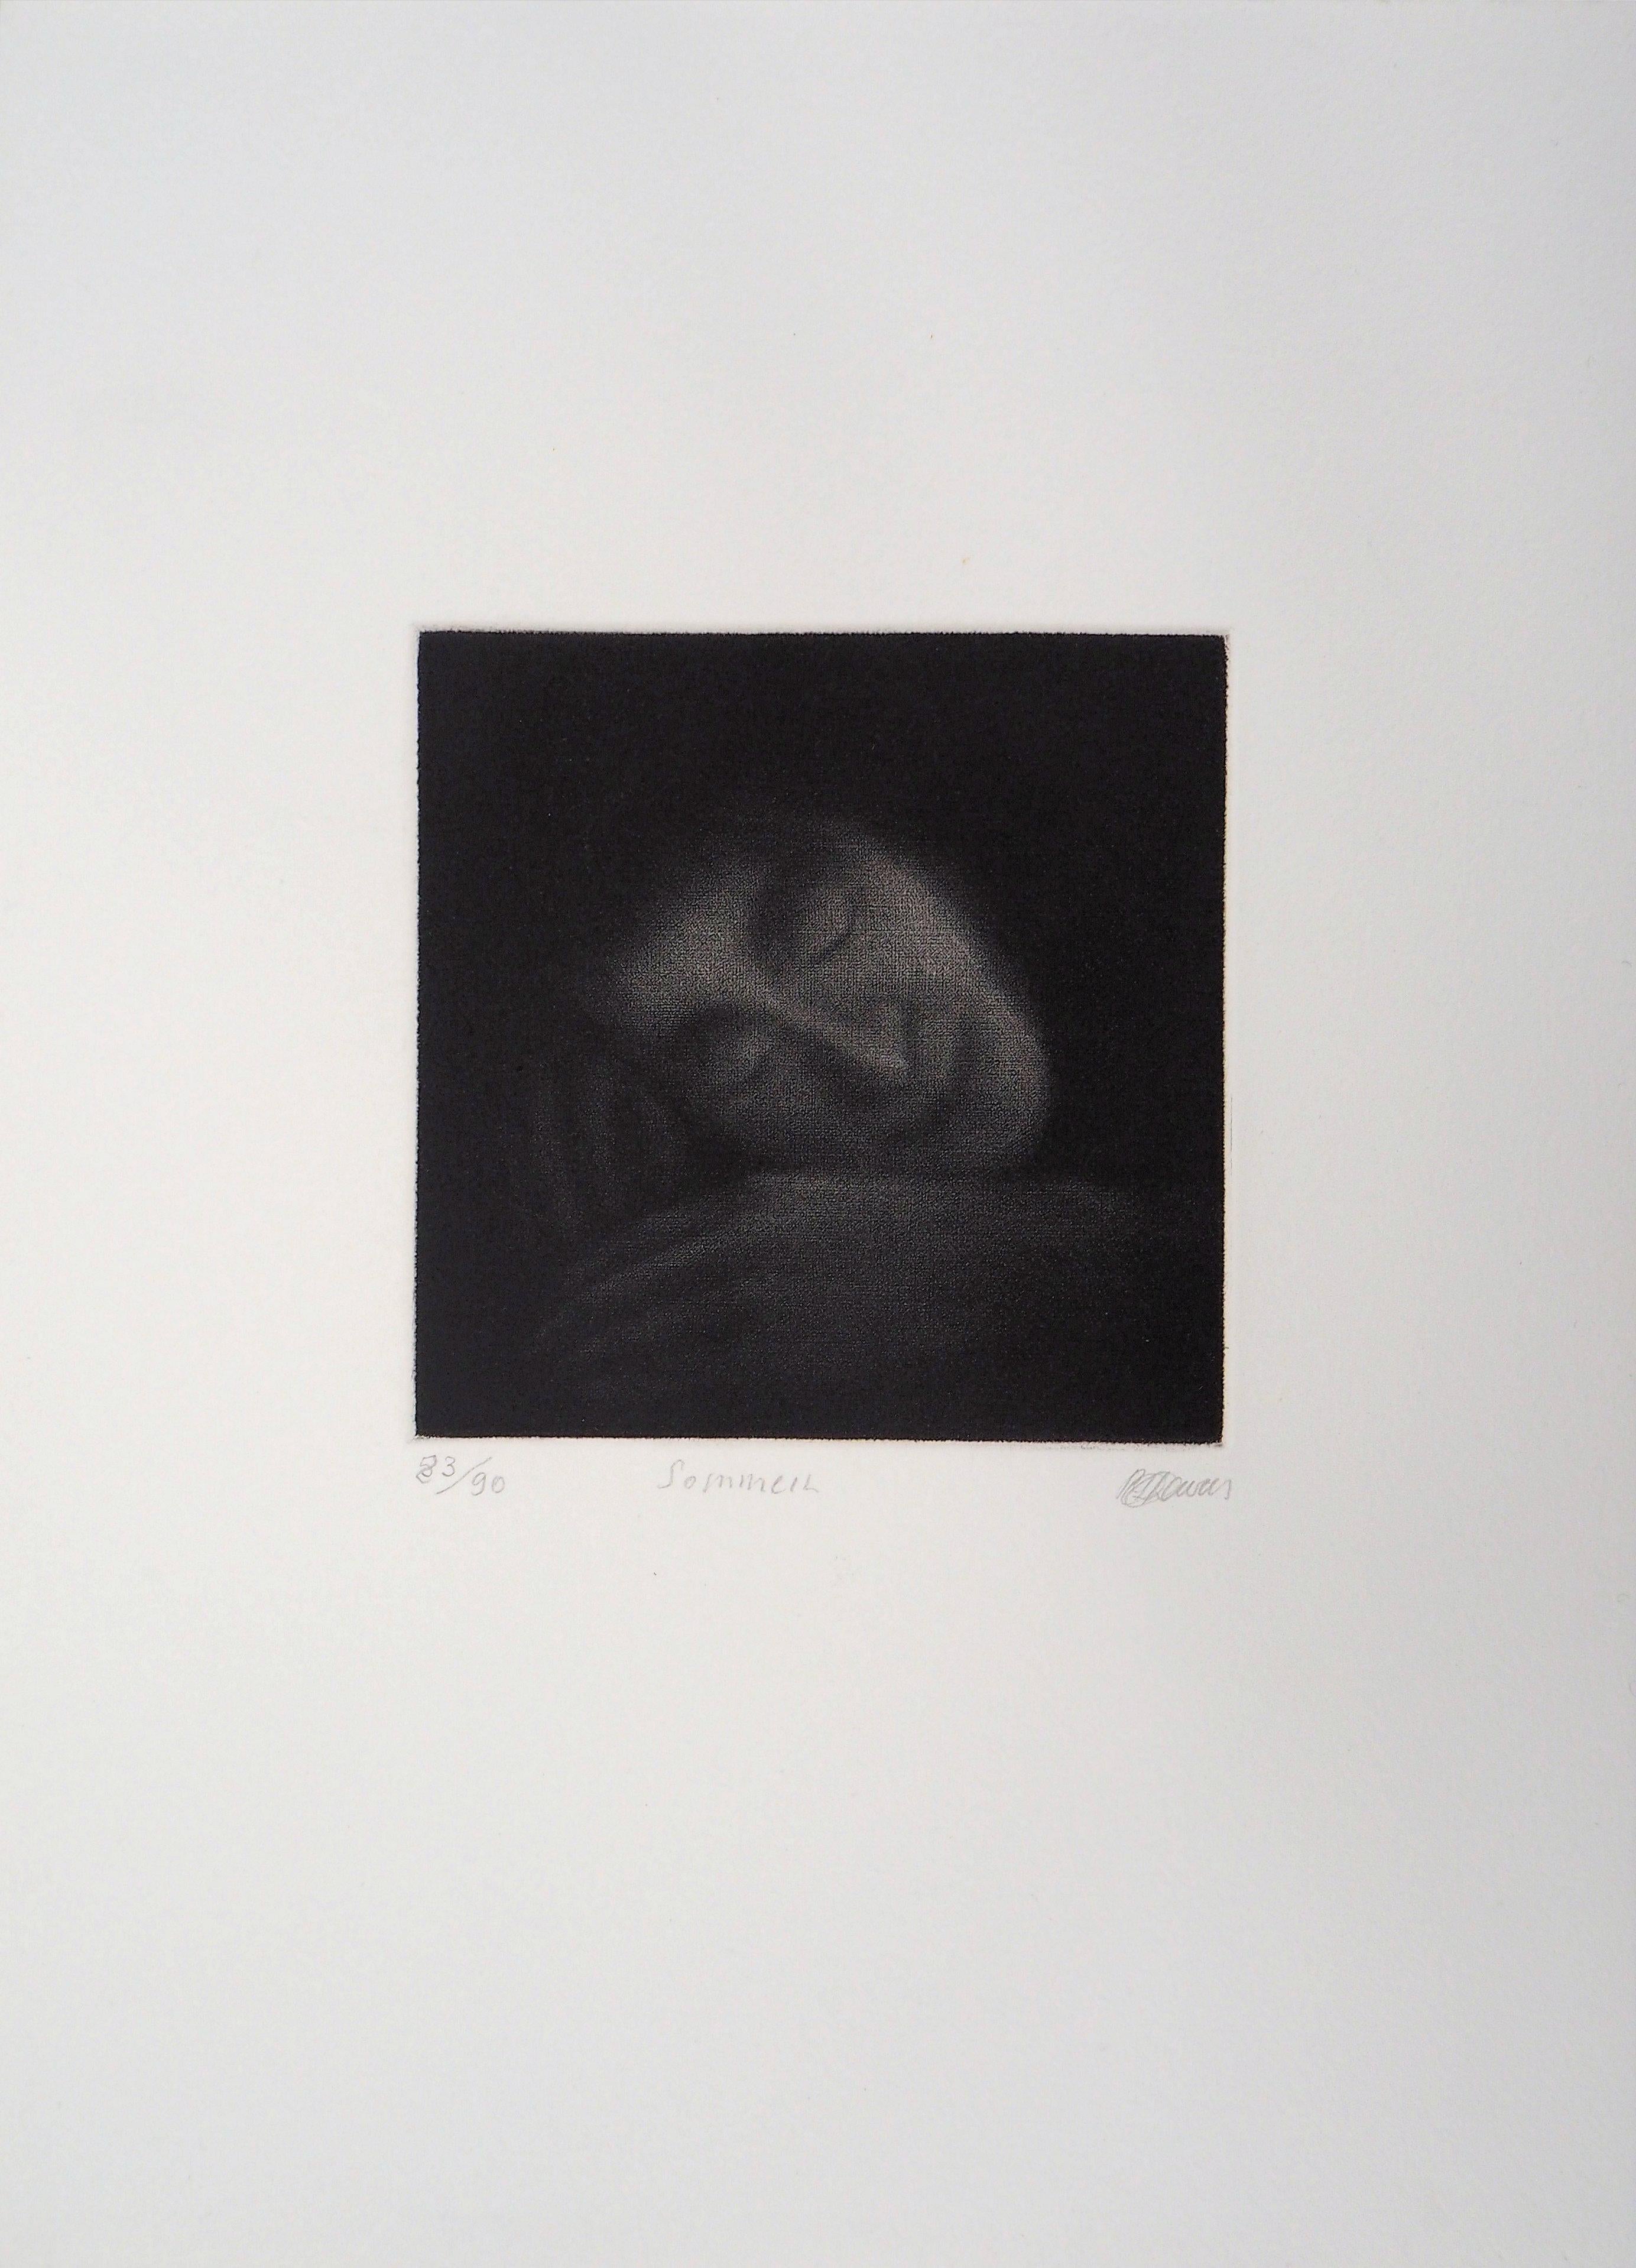 Richard Davies Figurative Print - Asleep - Original Handsigned Etching - Limited 90 copies